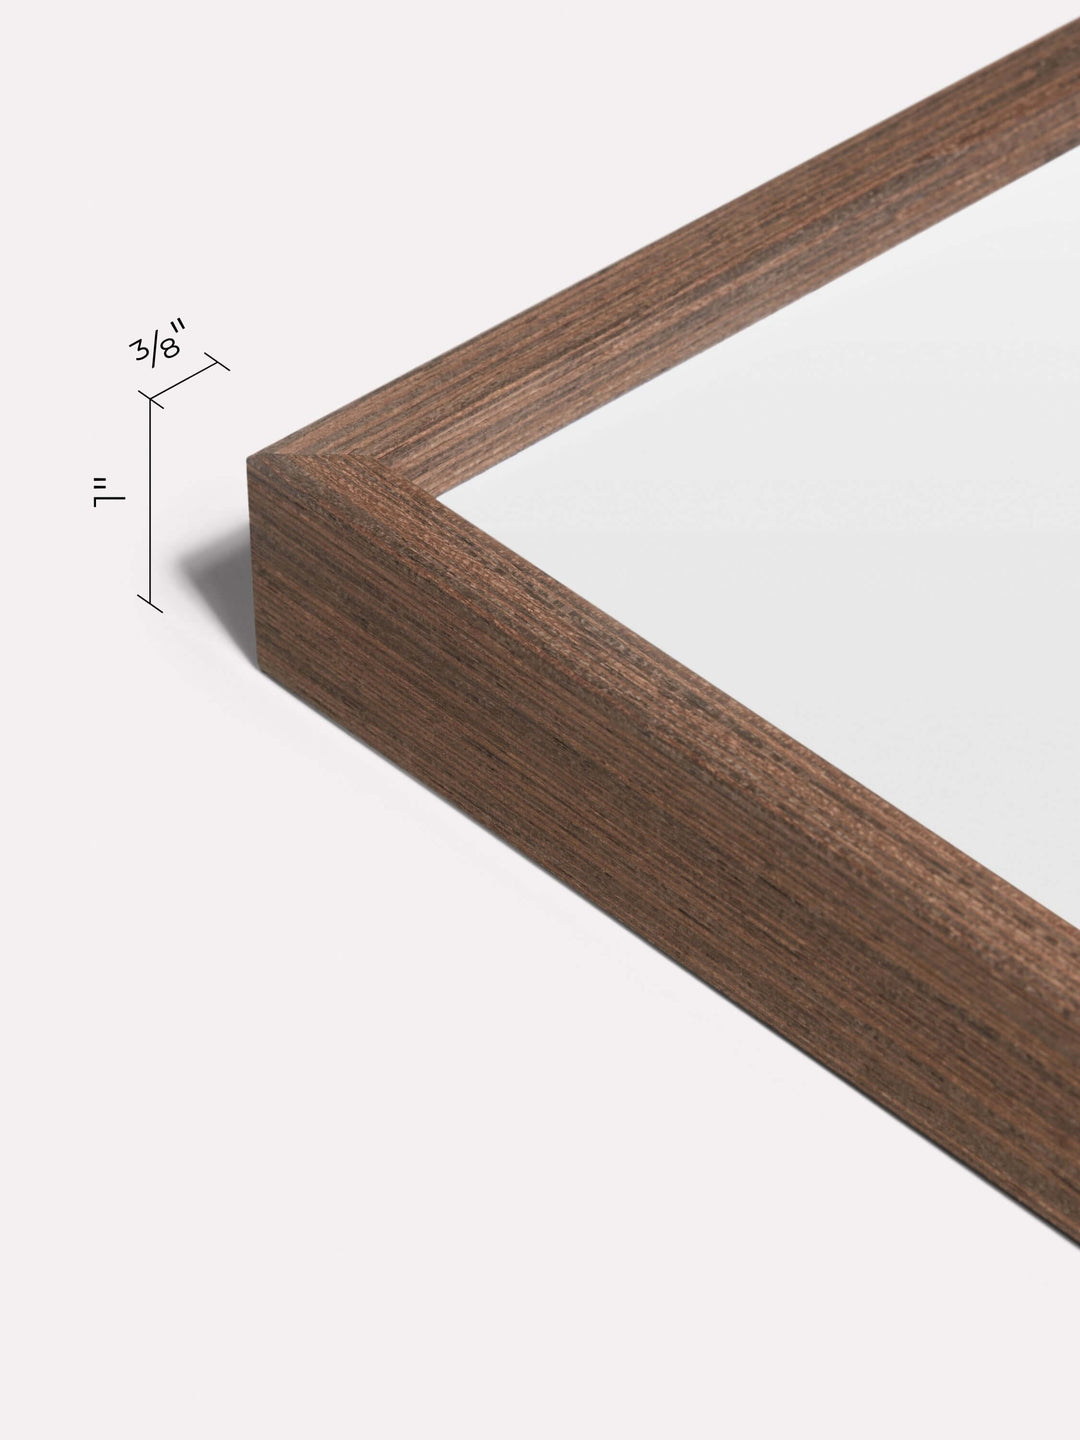 20x30-inch Thin Frame, Walnut - Close-up view